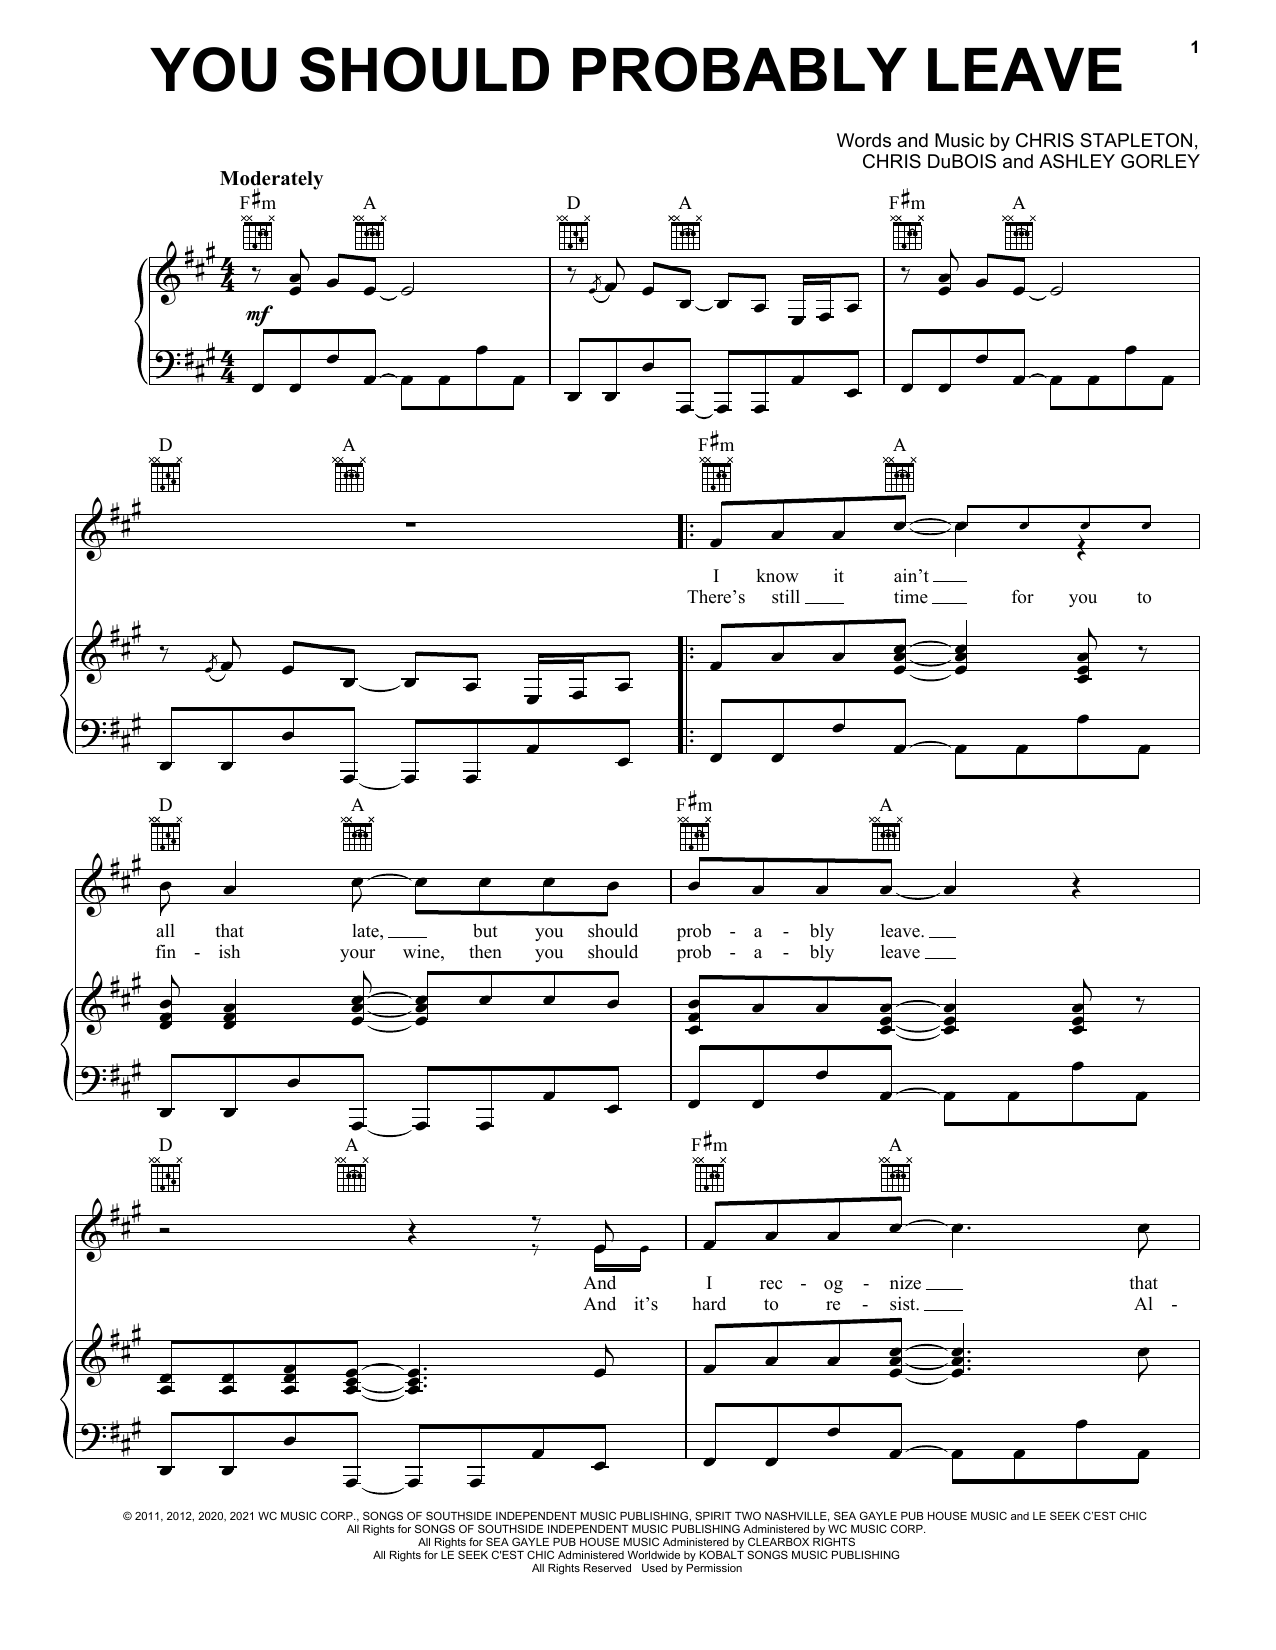 Chris Stapleton You Should Probably Leave Sheet Music Notes & Chords for Guitar Chords/Lyrics - Download or Print PDF